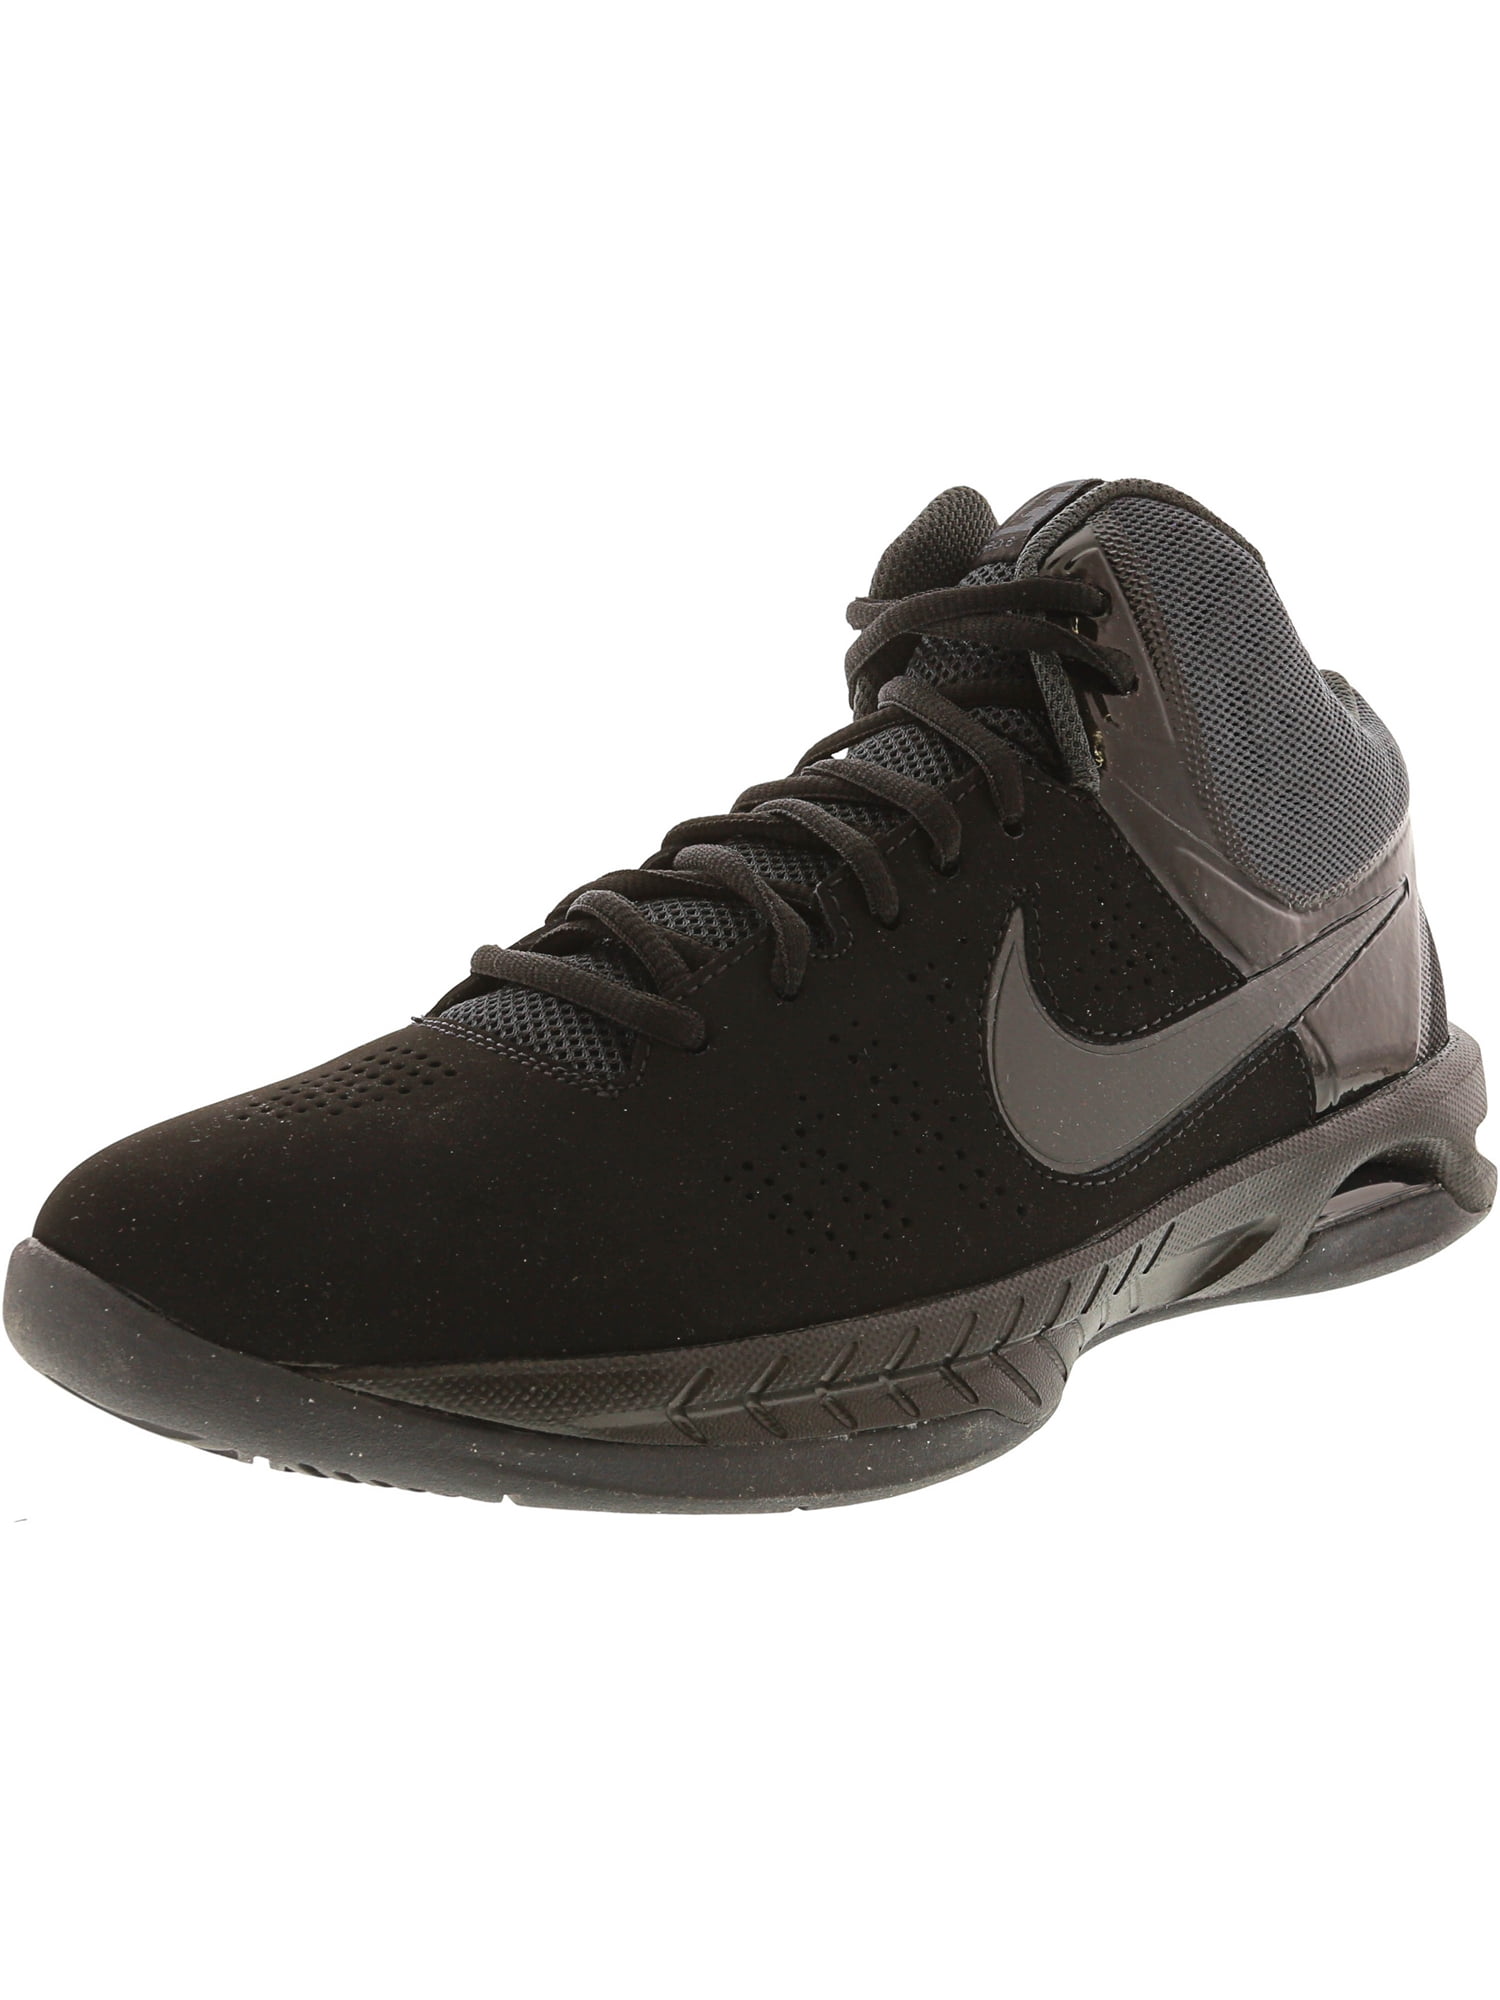 Similar Generalmente Rápido Nike Men's Air Visi Pro Vi Nbk Black/Anthracite Ankle-High Nubuck Basketball  Shoe - 10M - Walmart.com